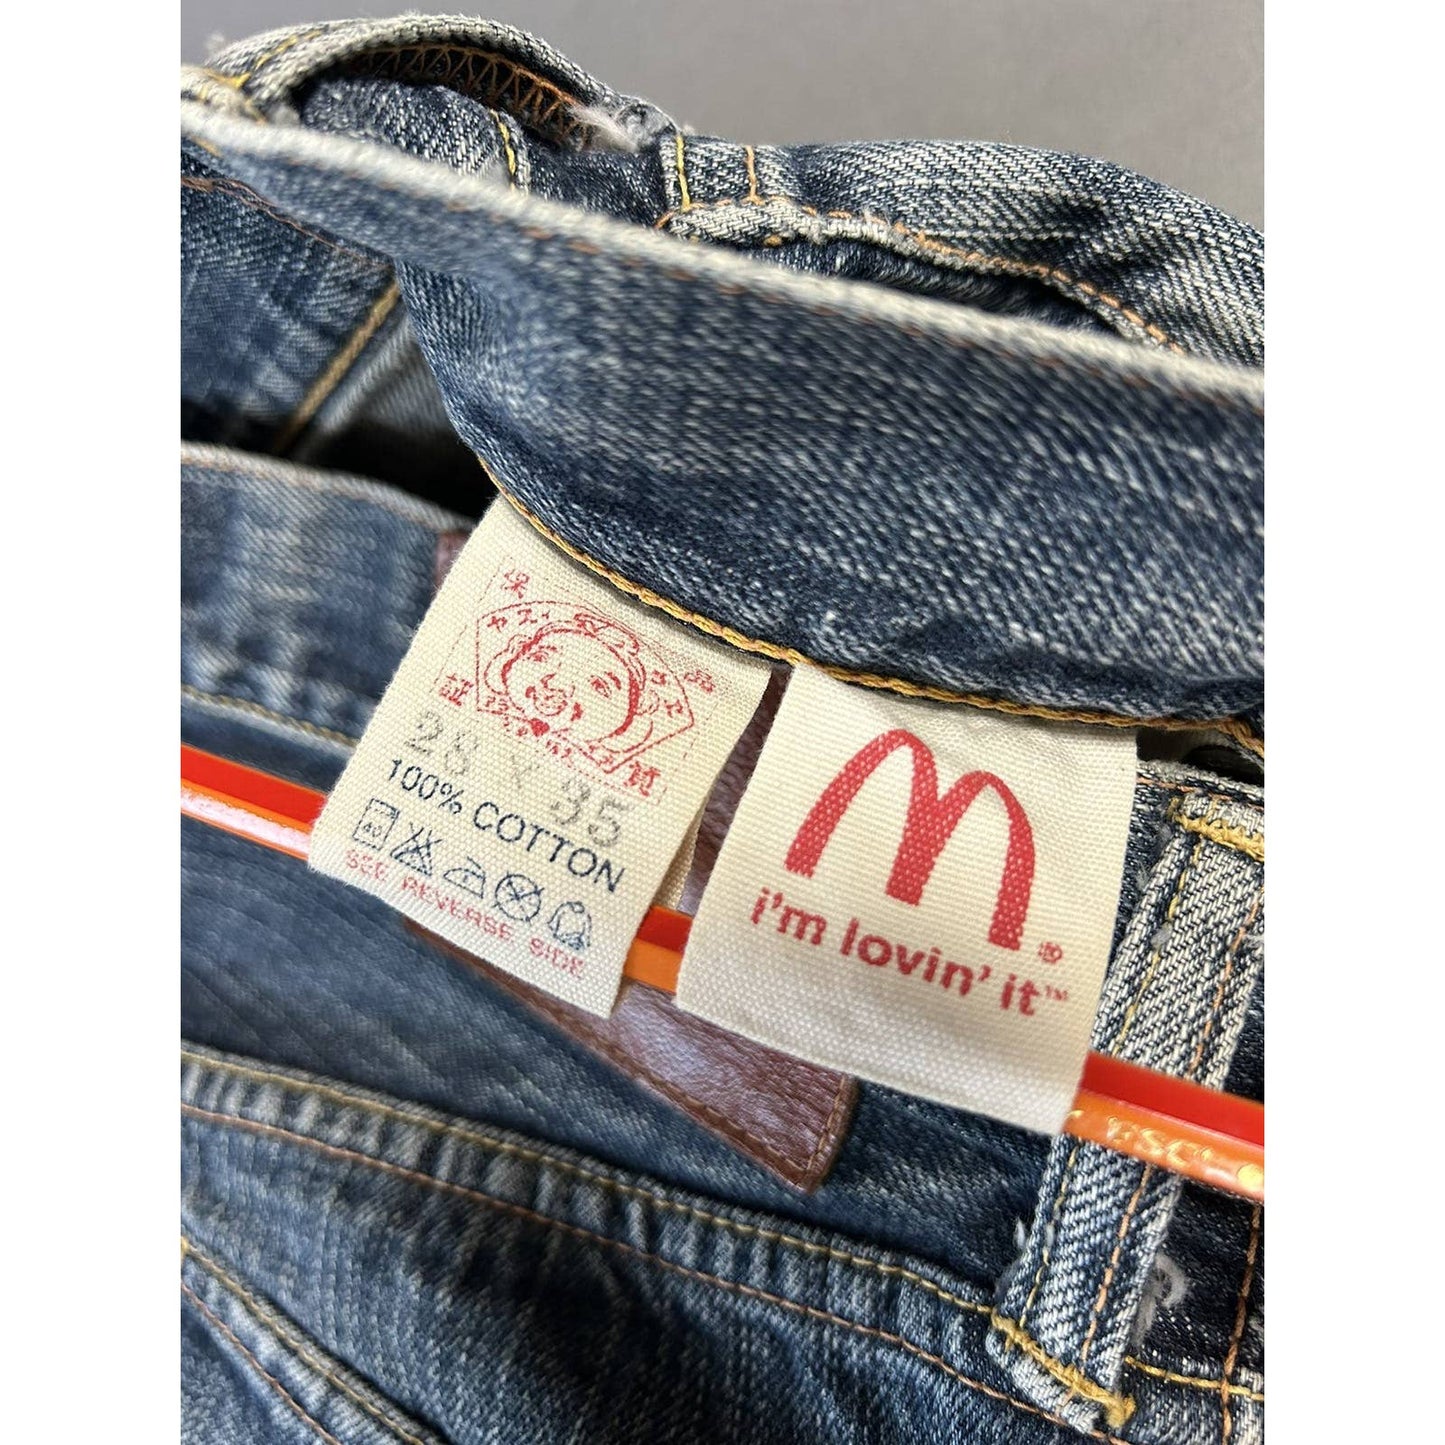 Evisu x McDonalds Denim Jeans I’m lovin it selvedge